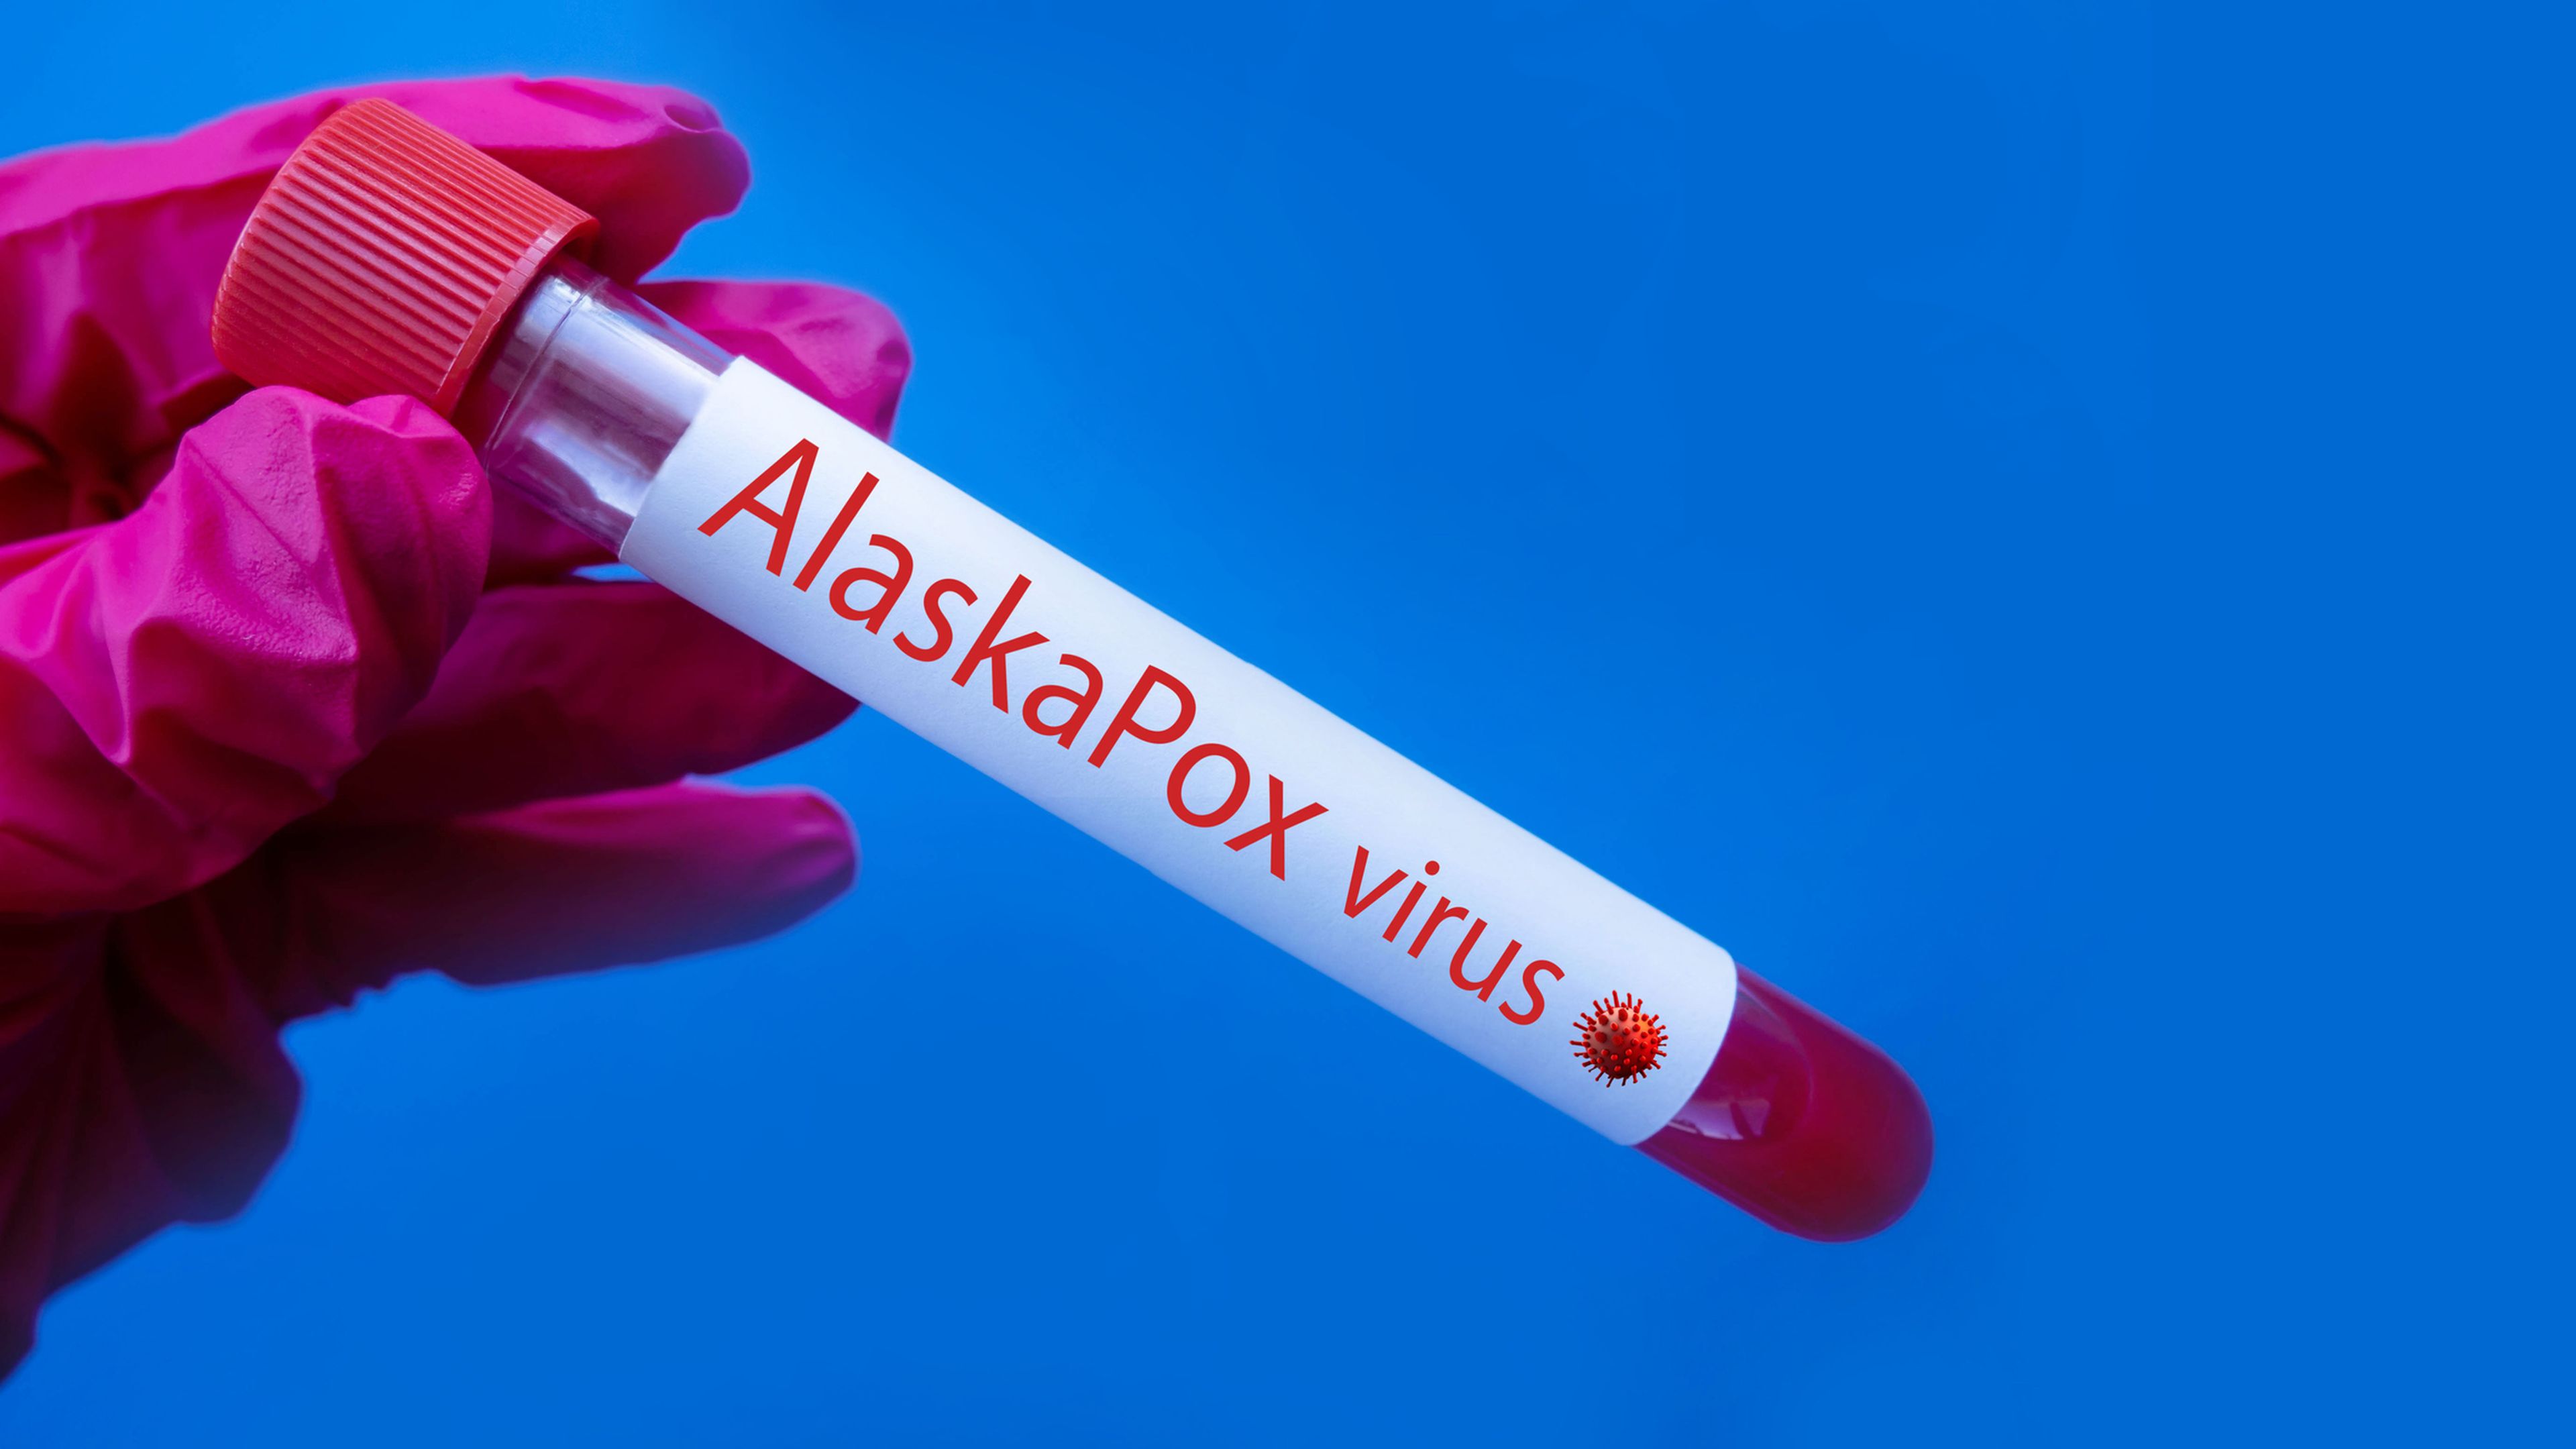 Alaskapox